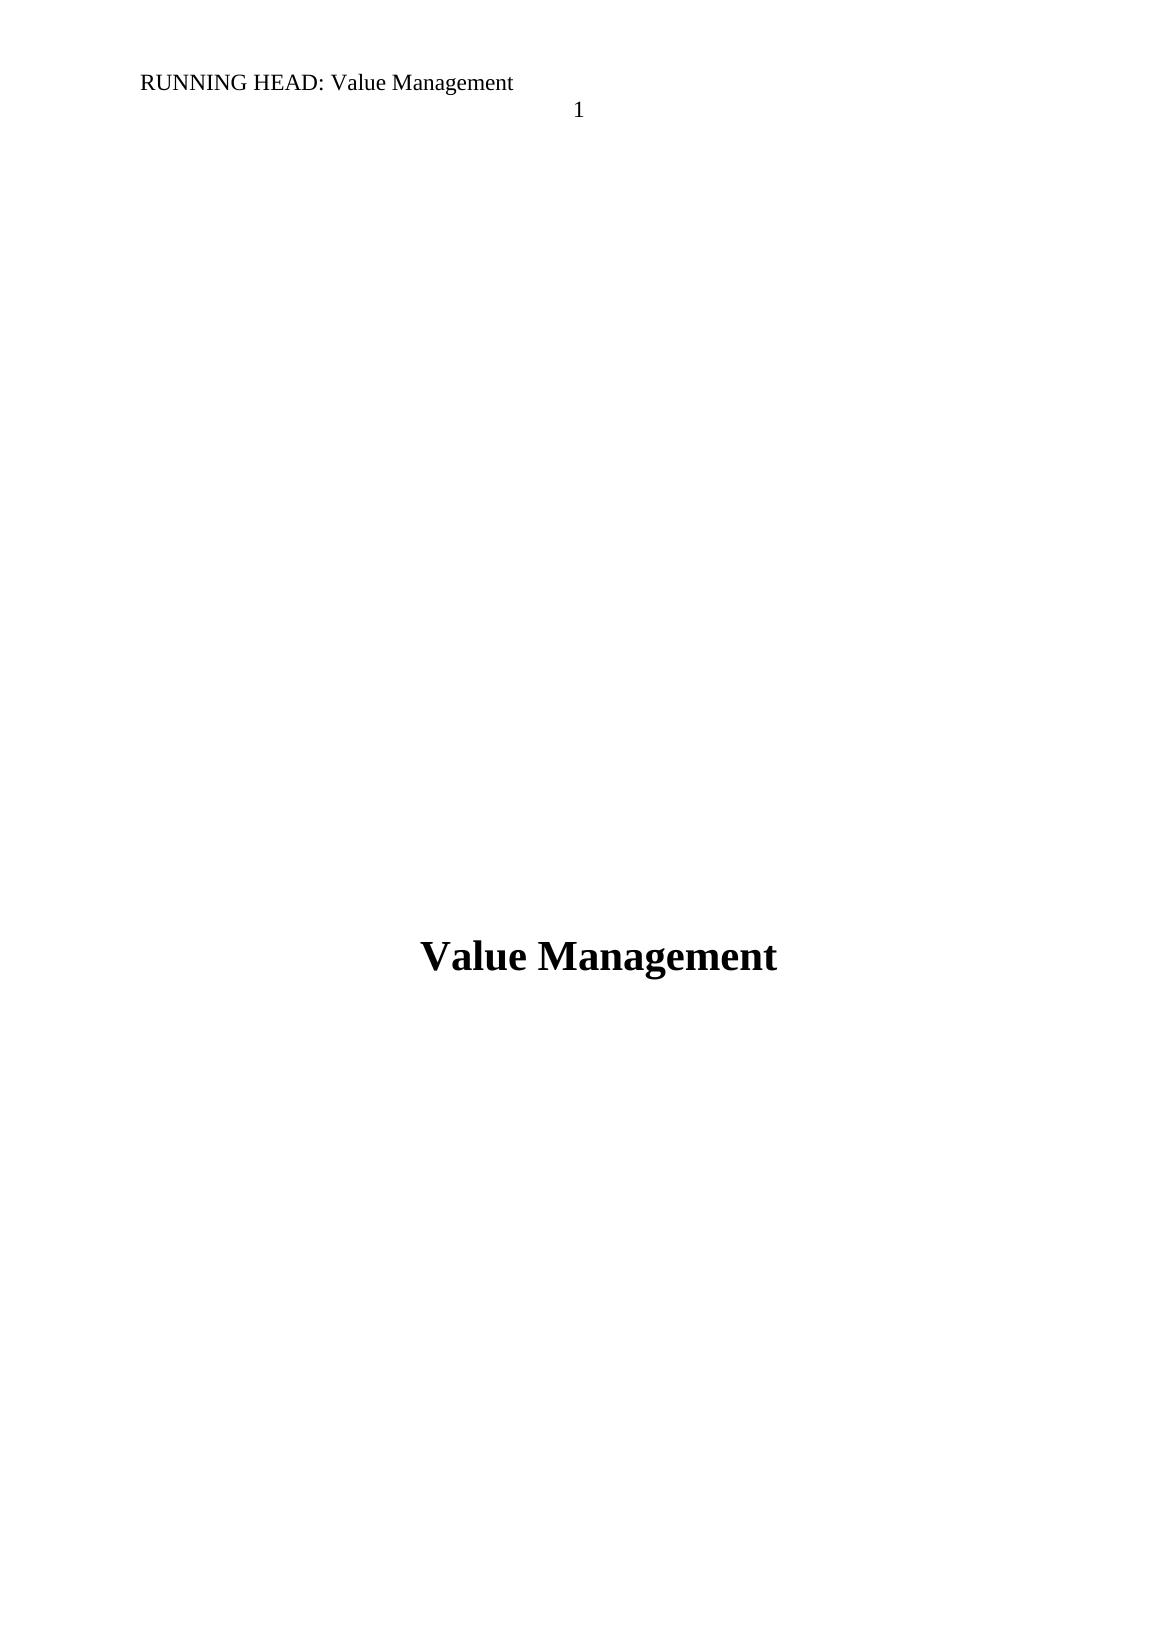 Value Management Executive Summary: A Study of STO Maldives_1